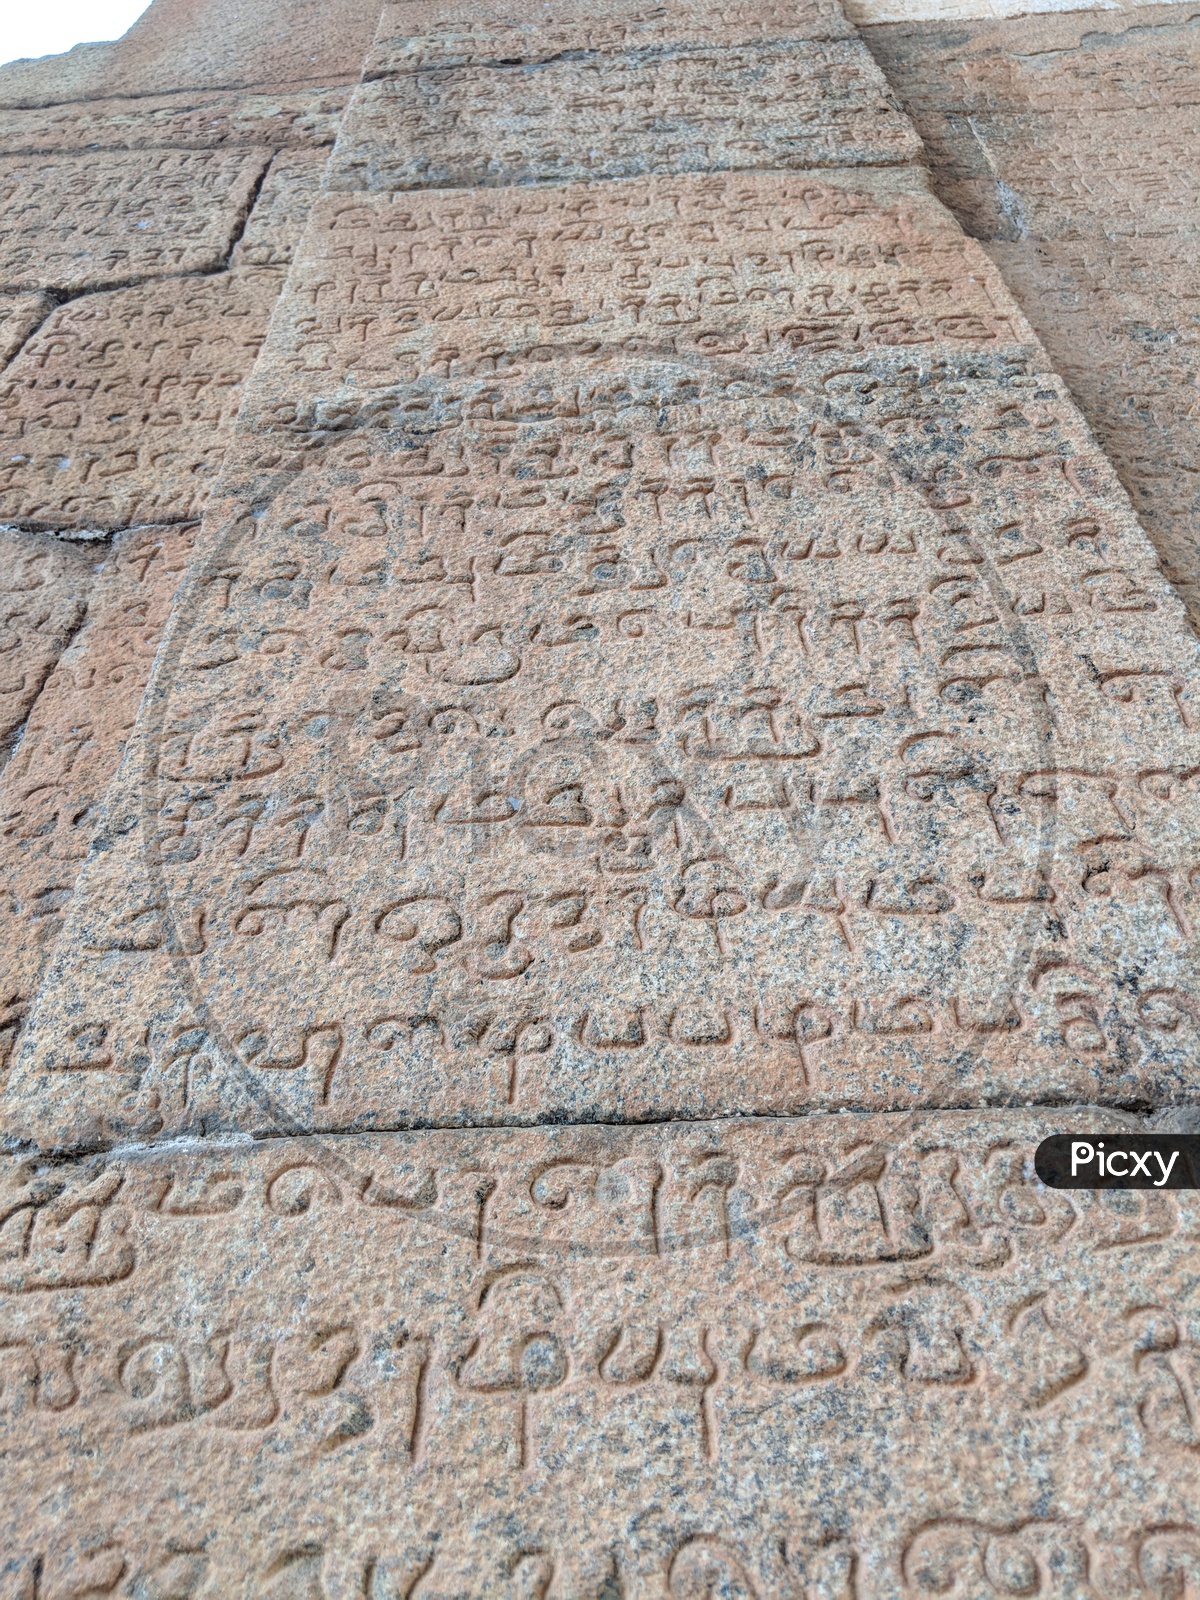 Tamil and Sanskrit Inscriptions on the walls of Brihadeeswarar Temple (UNESCO)